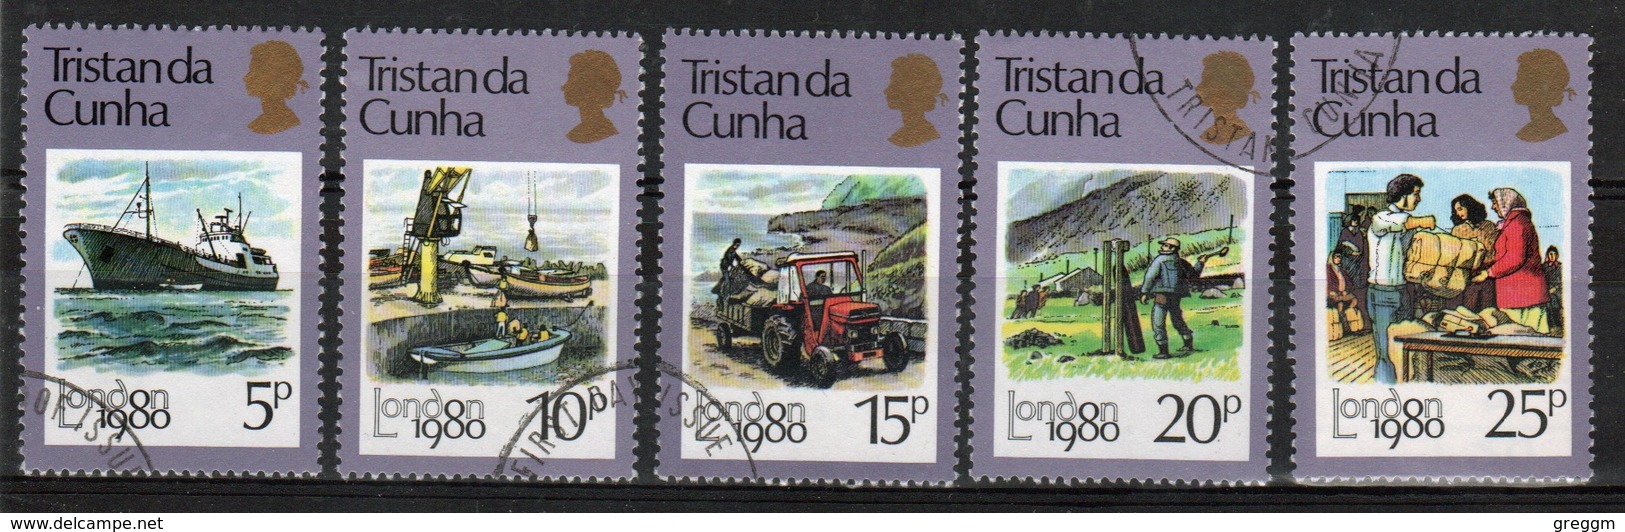 Tristan Da Cunha 1980 Complete Set Of Stamps Commemorating London 80 Stamp Exhibition. - Tristan Da Cunha